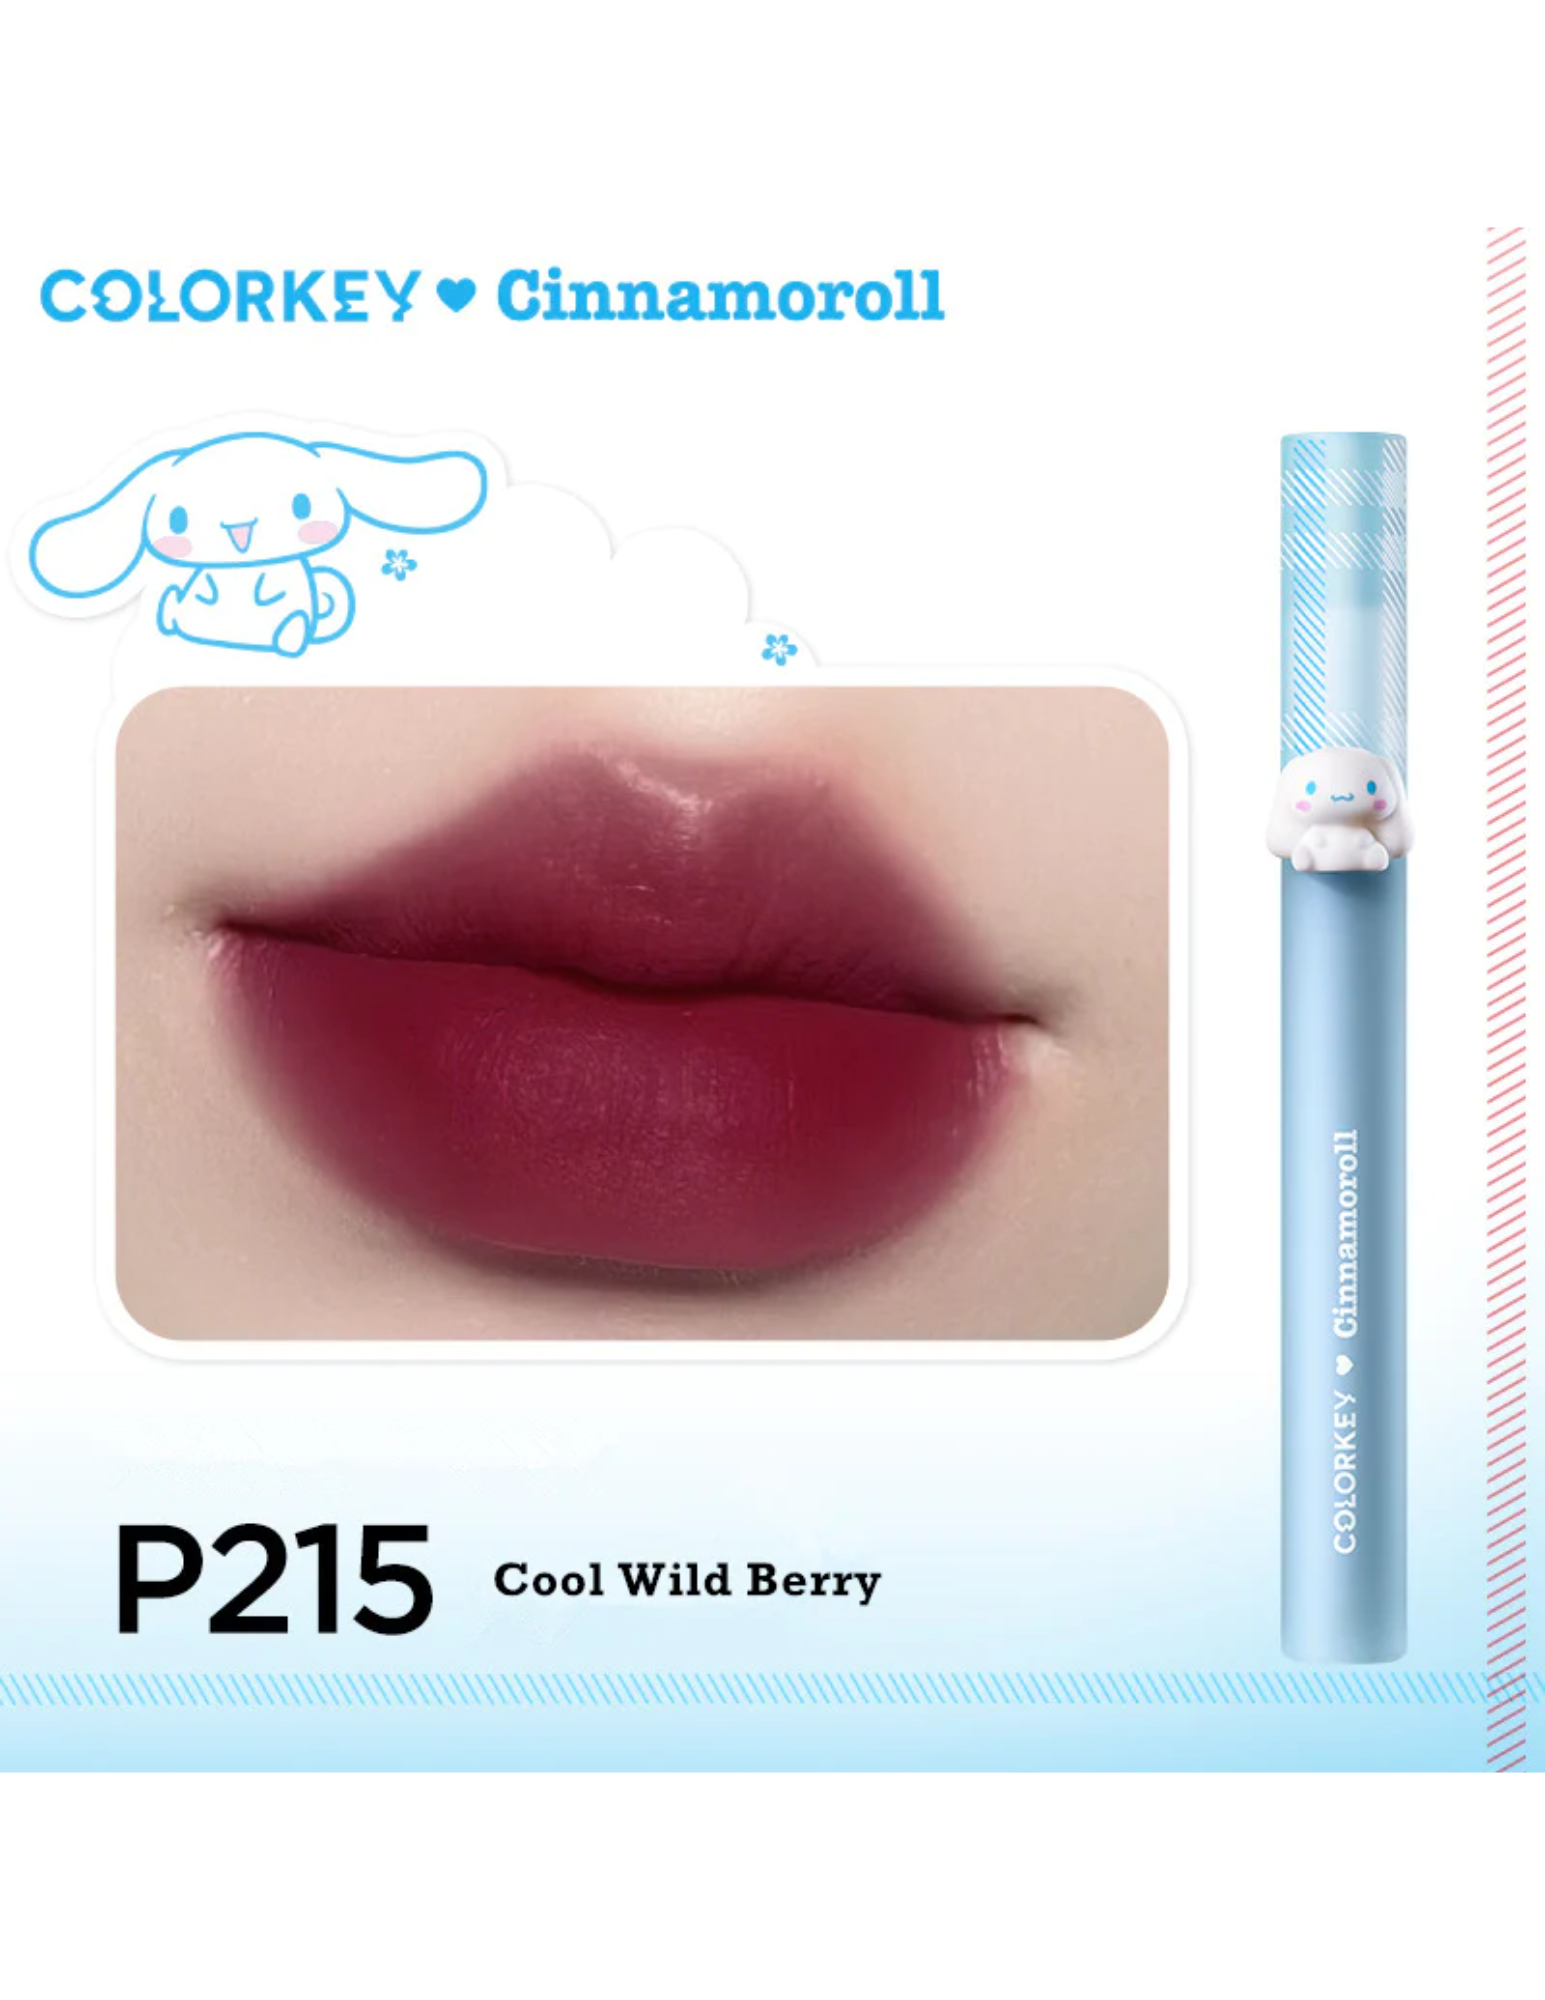 COLORKEY X Cinnamoroll Airy Matte Lipstick